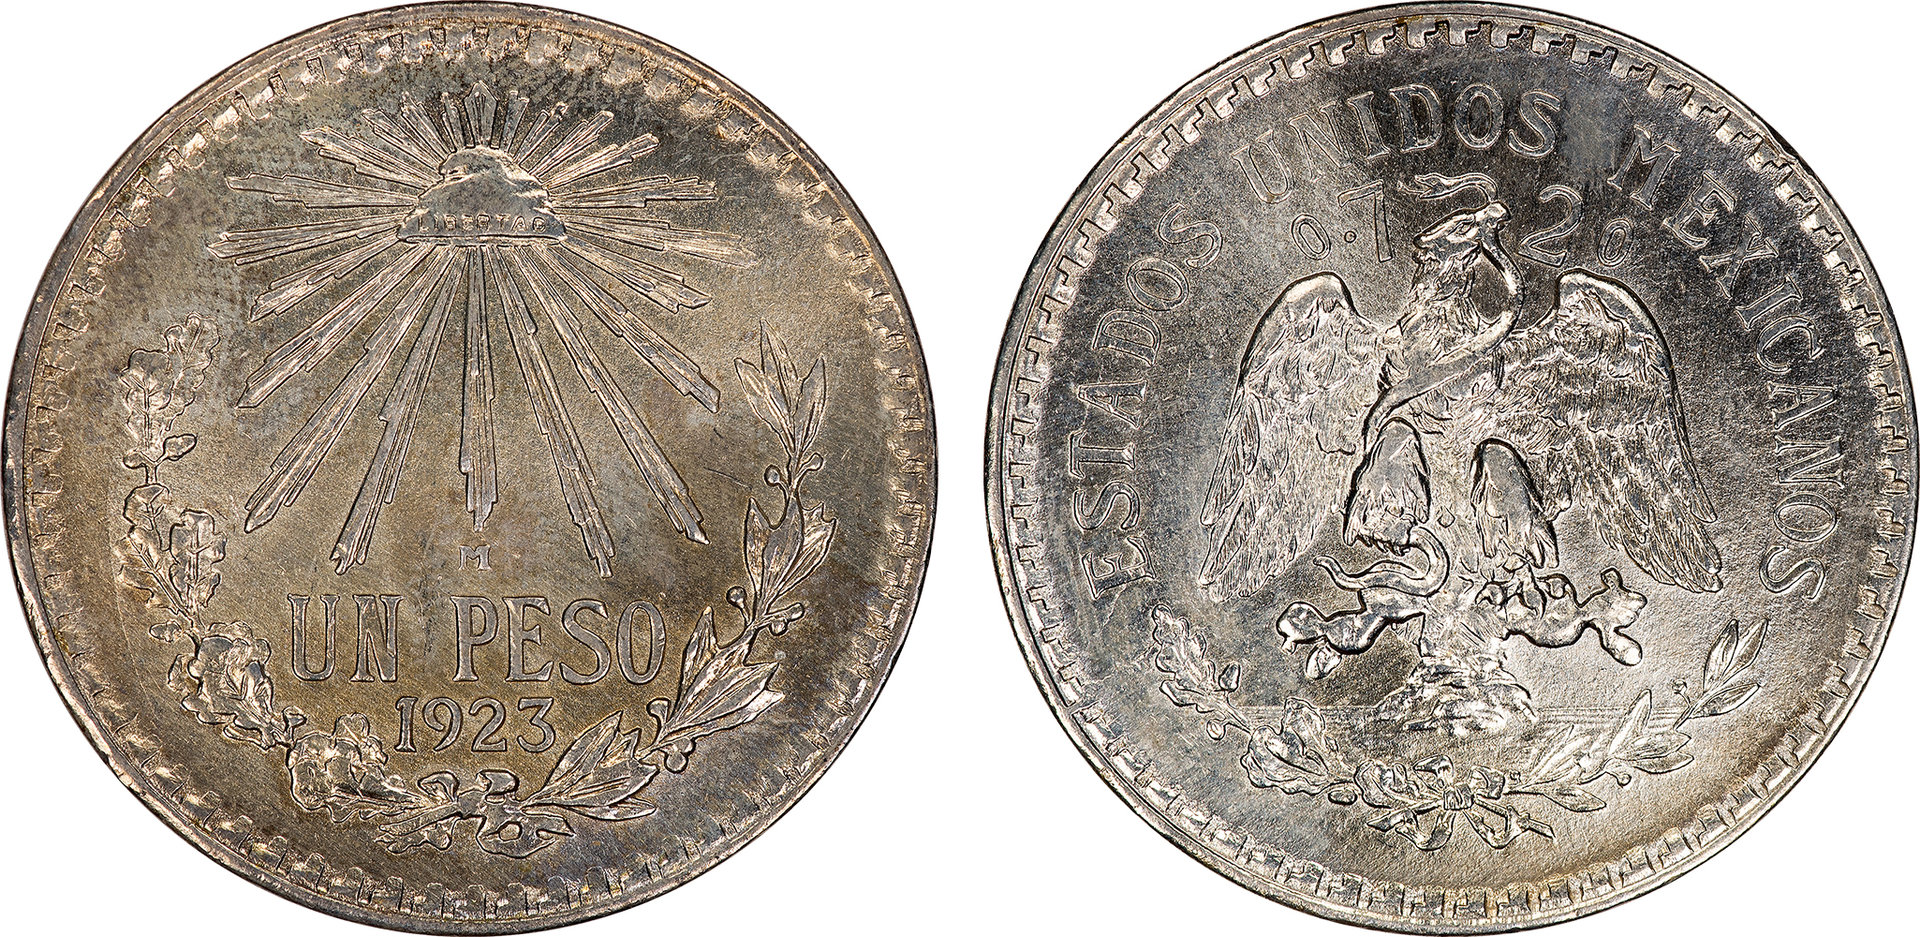 Mexico - 1923 1 Peso.jpg